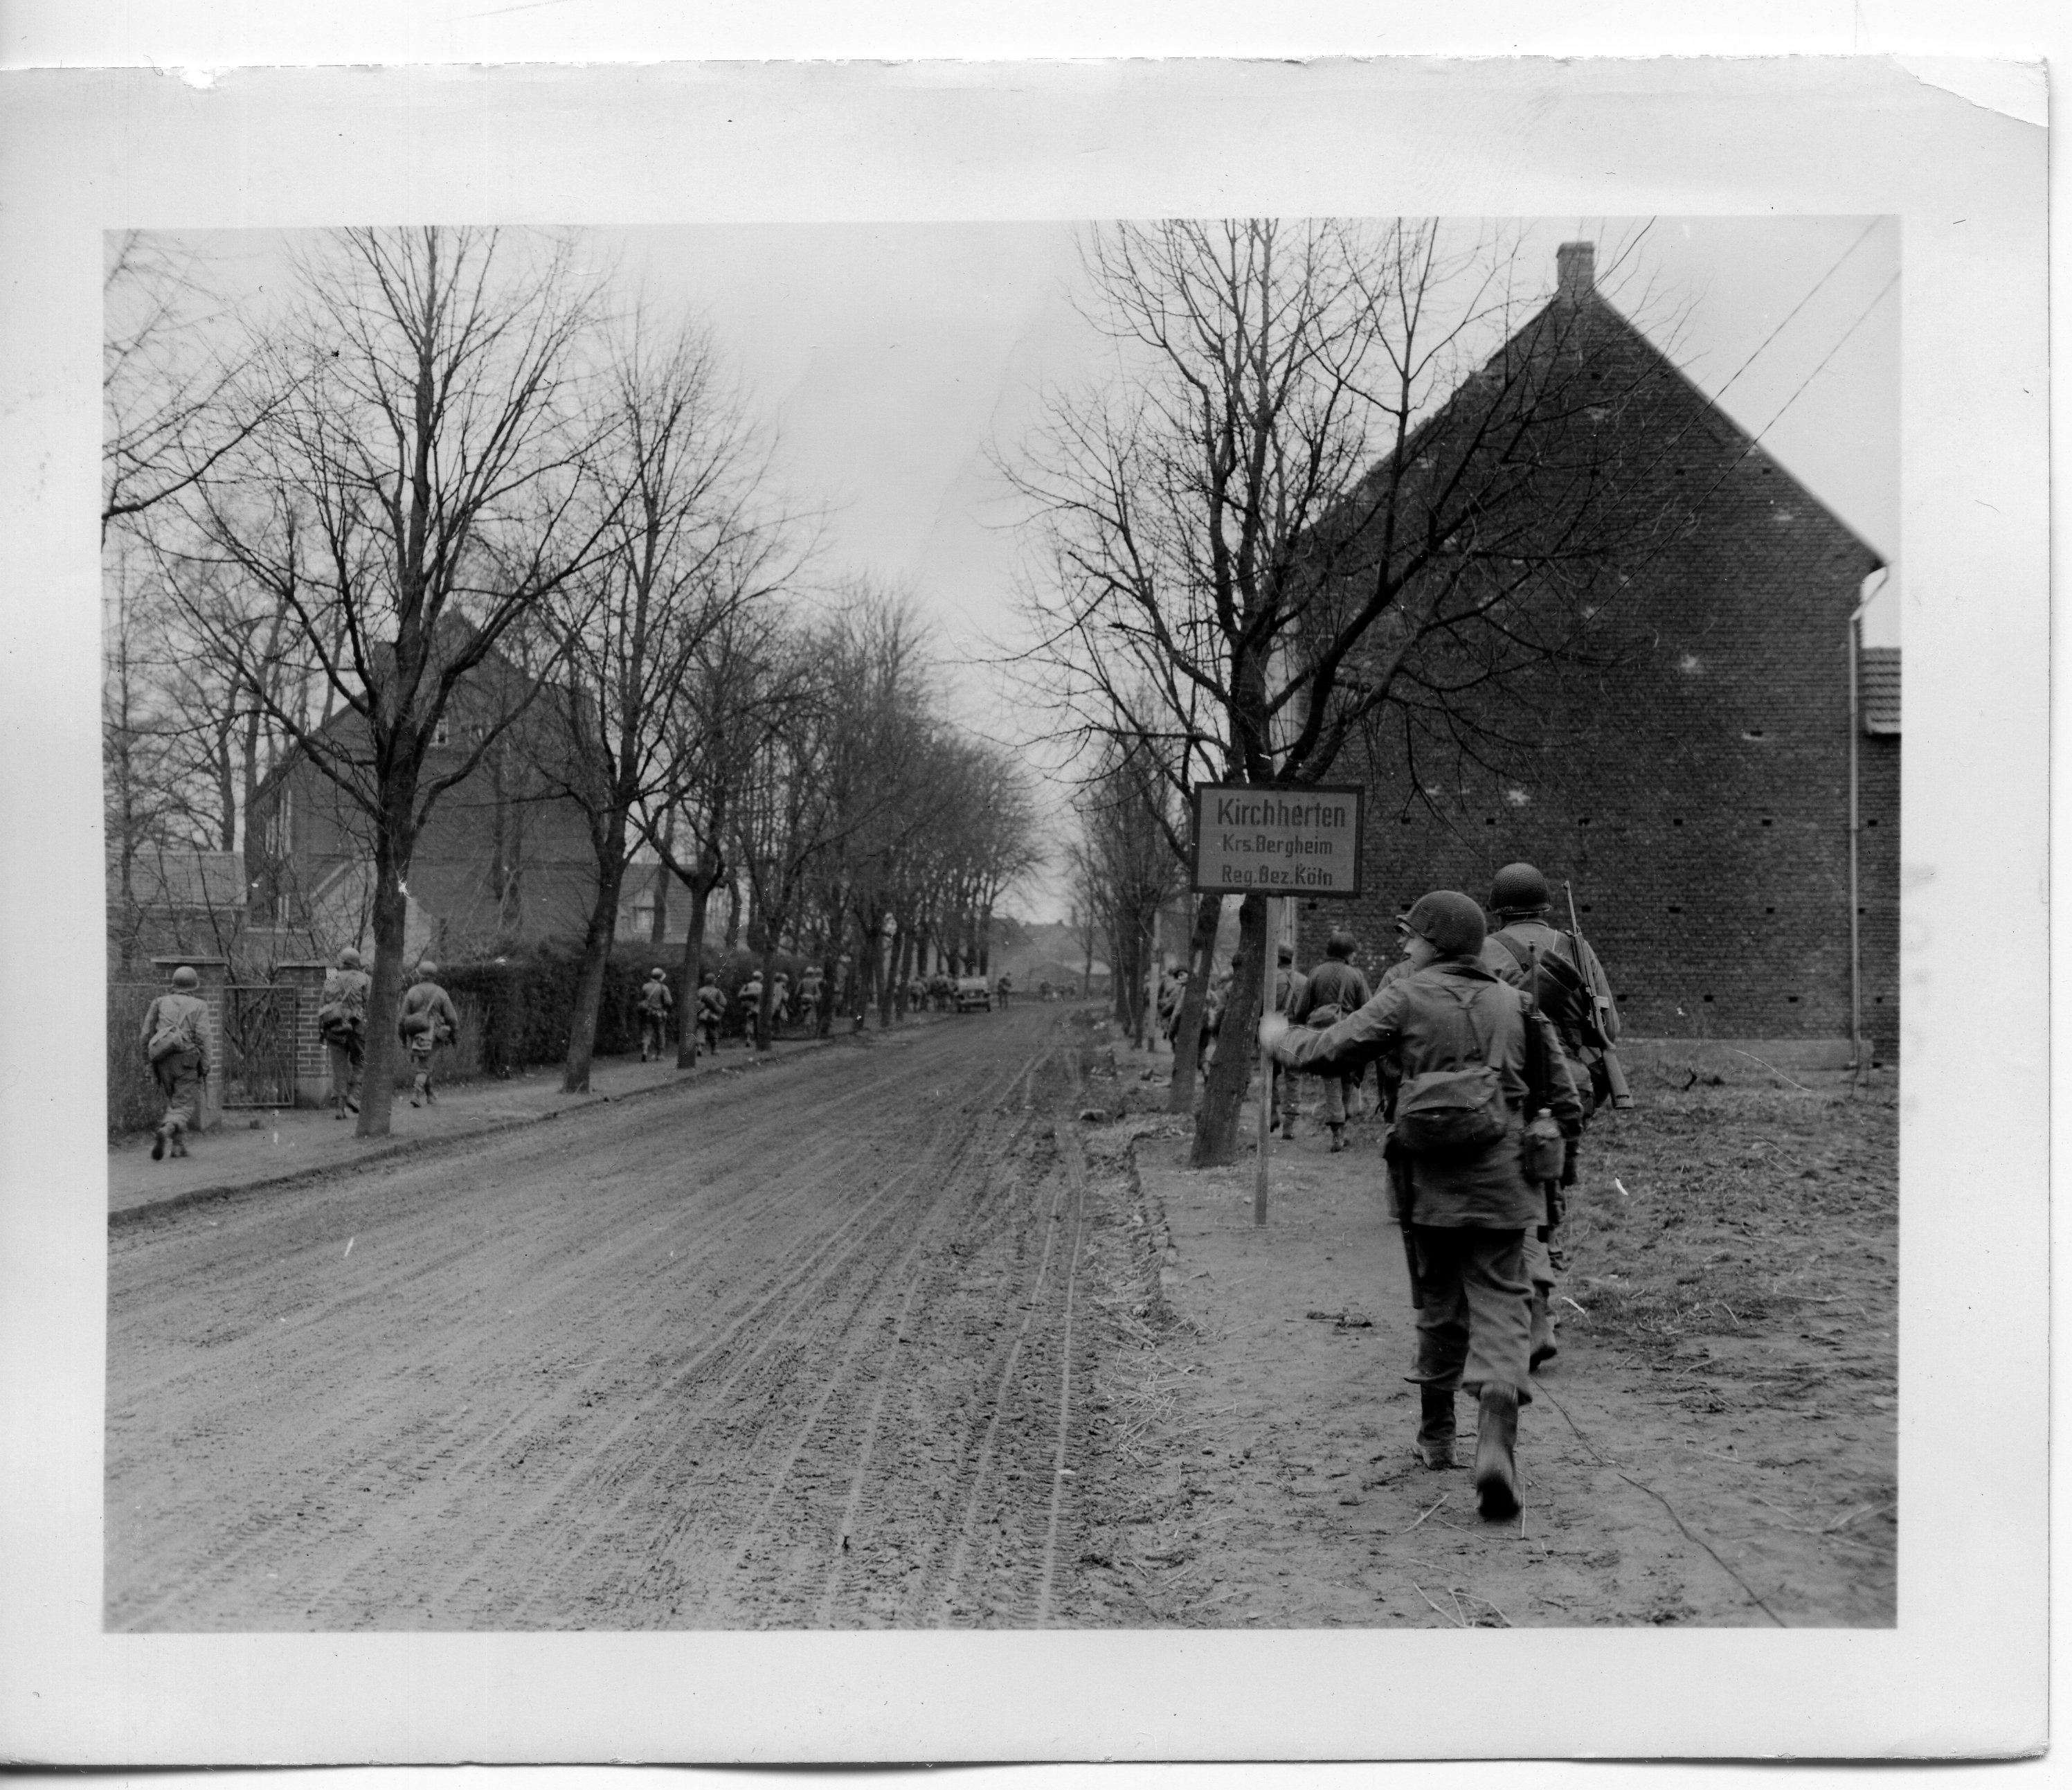 111-SC-270967_-_Infantrymen_of_30th_Division,_9th_U.S._Army,_move_through_town_of_Kirchherten,...jpg